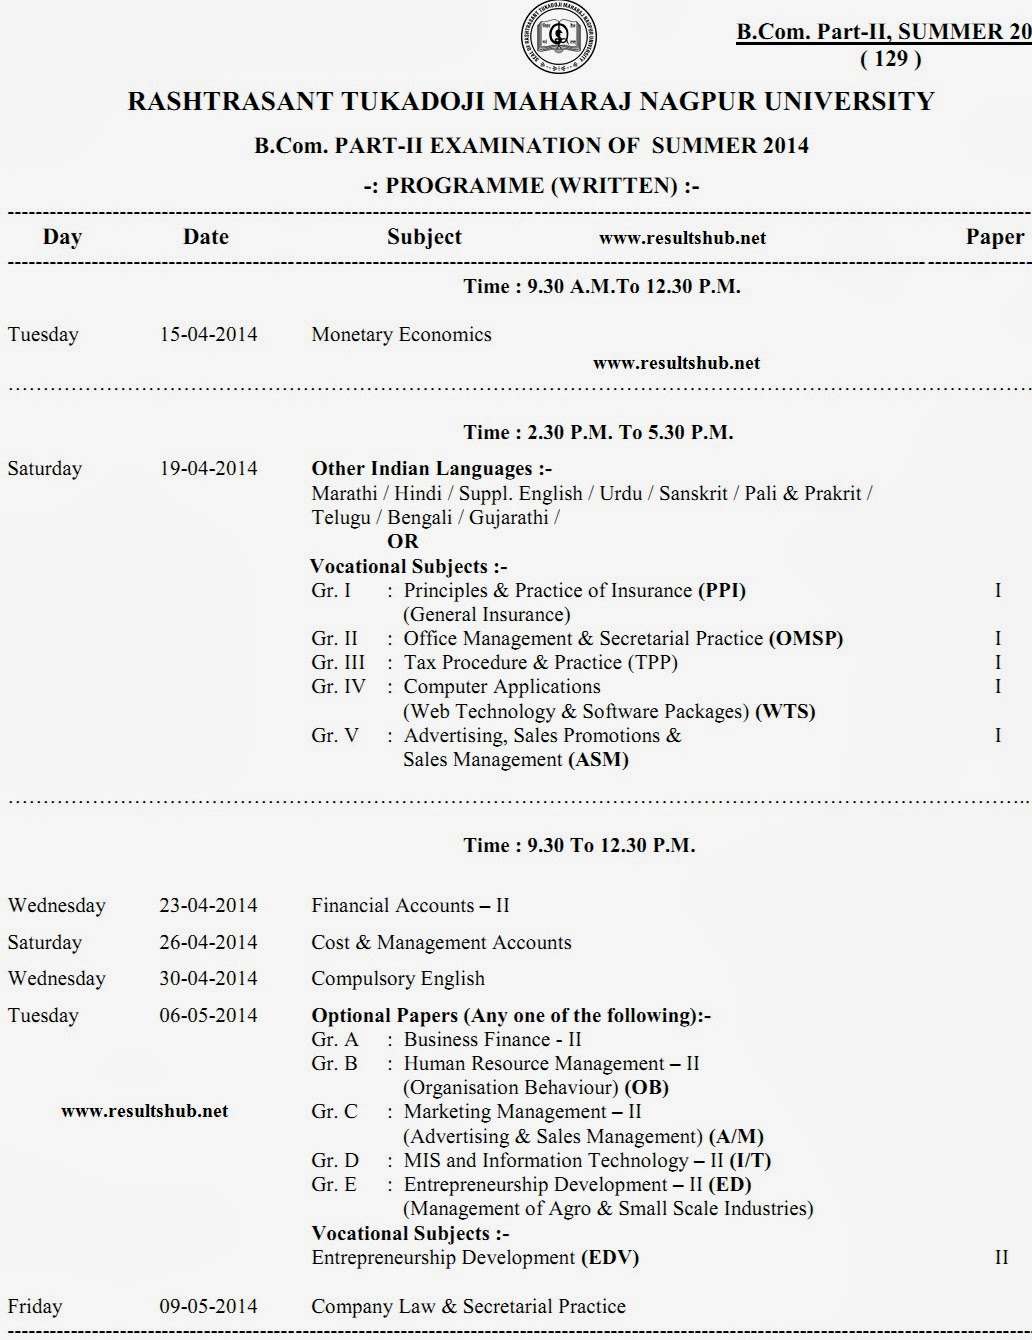 B.Com. Part 2 Summer 2014 Timetable Nagpur University